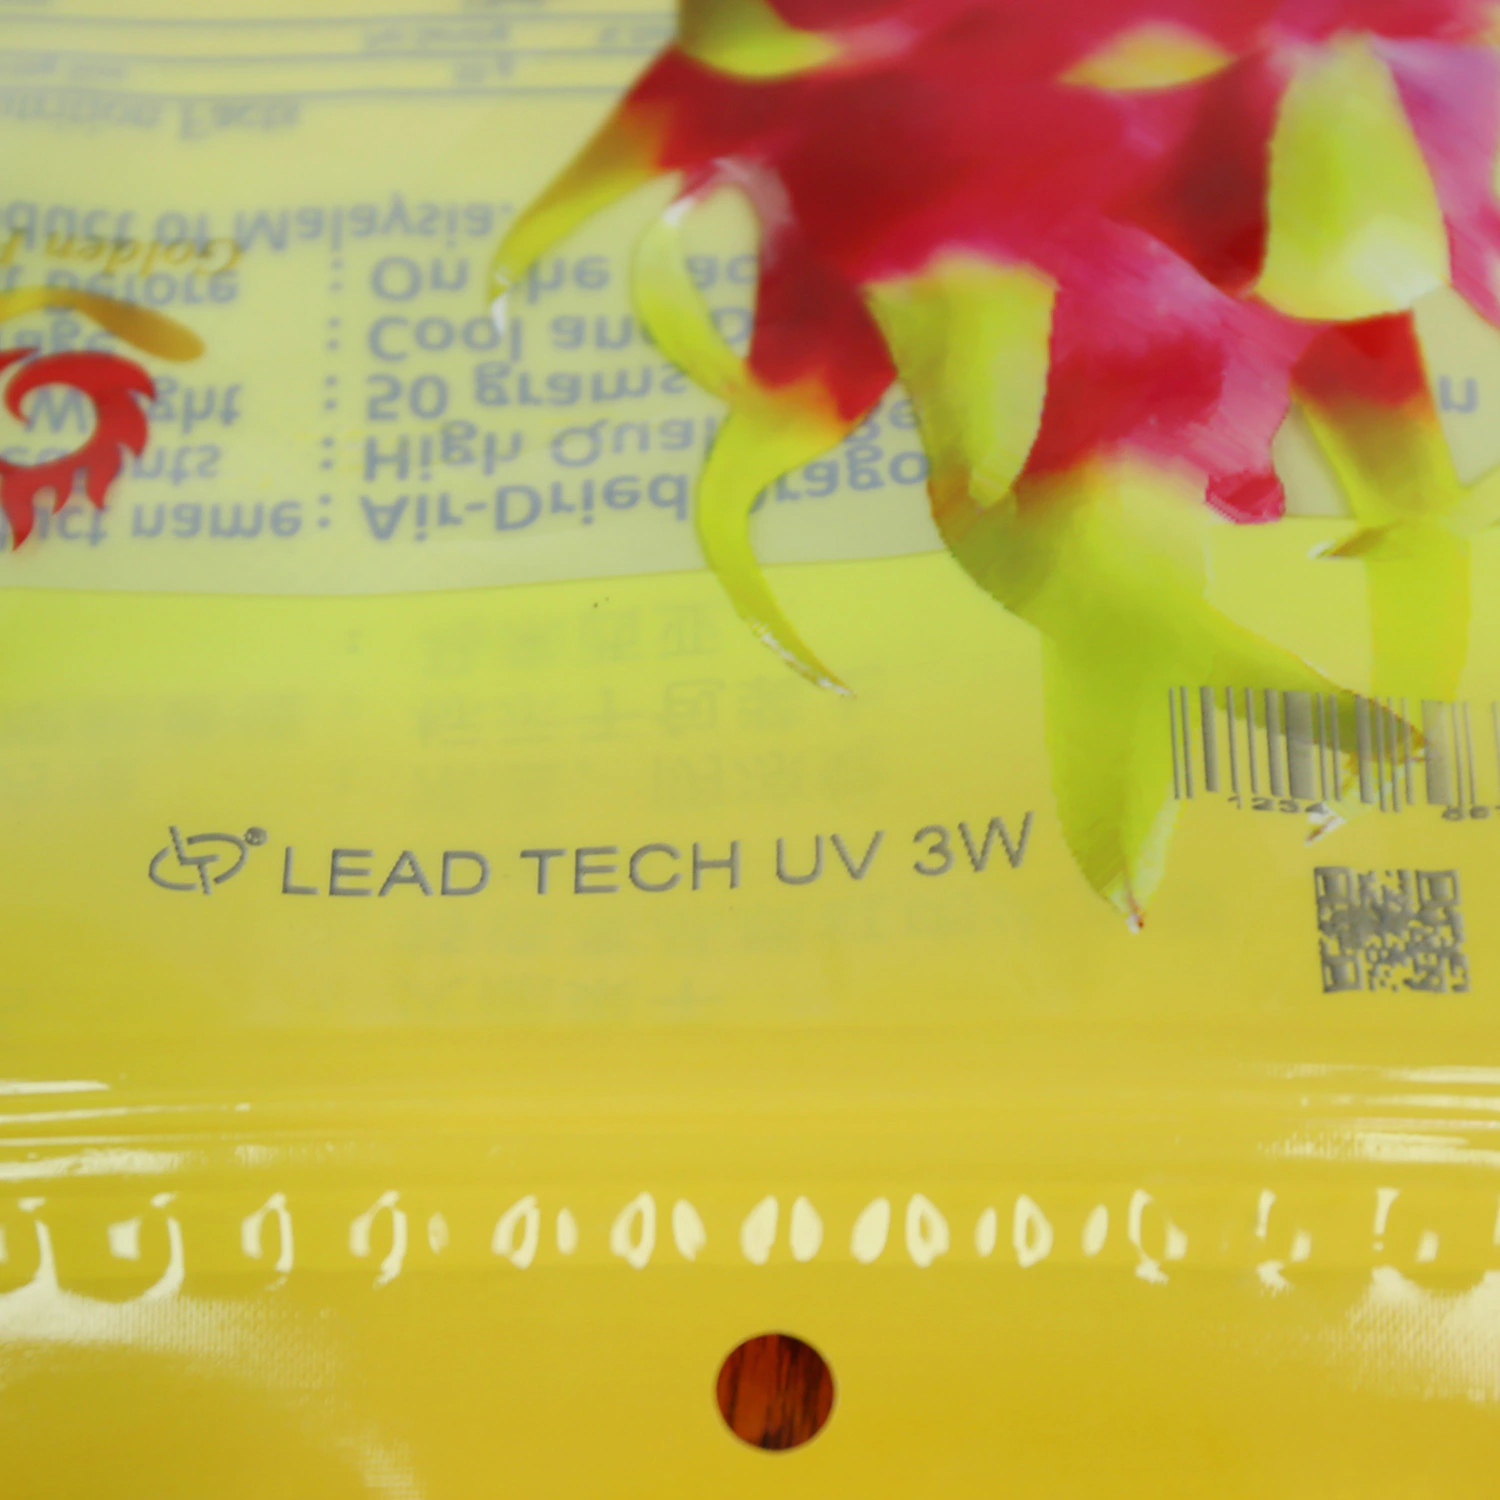 Lead Tech Lt8003u/Lt8005u UV 3W/5W Digital Laser Printer for Plastic, Metal Printing